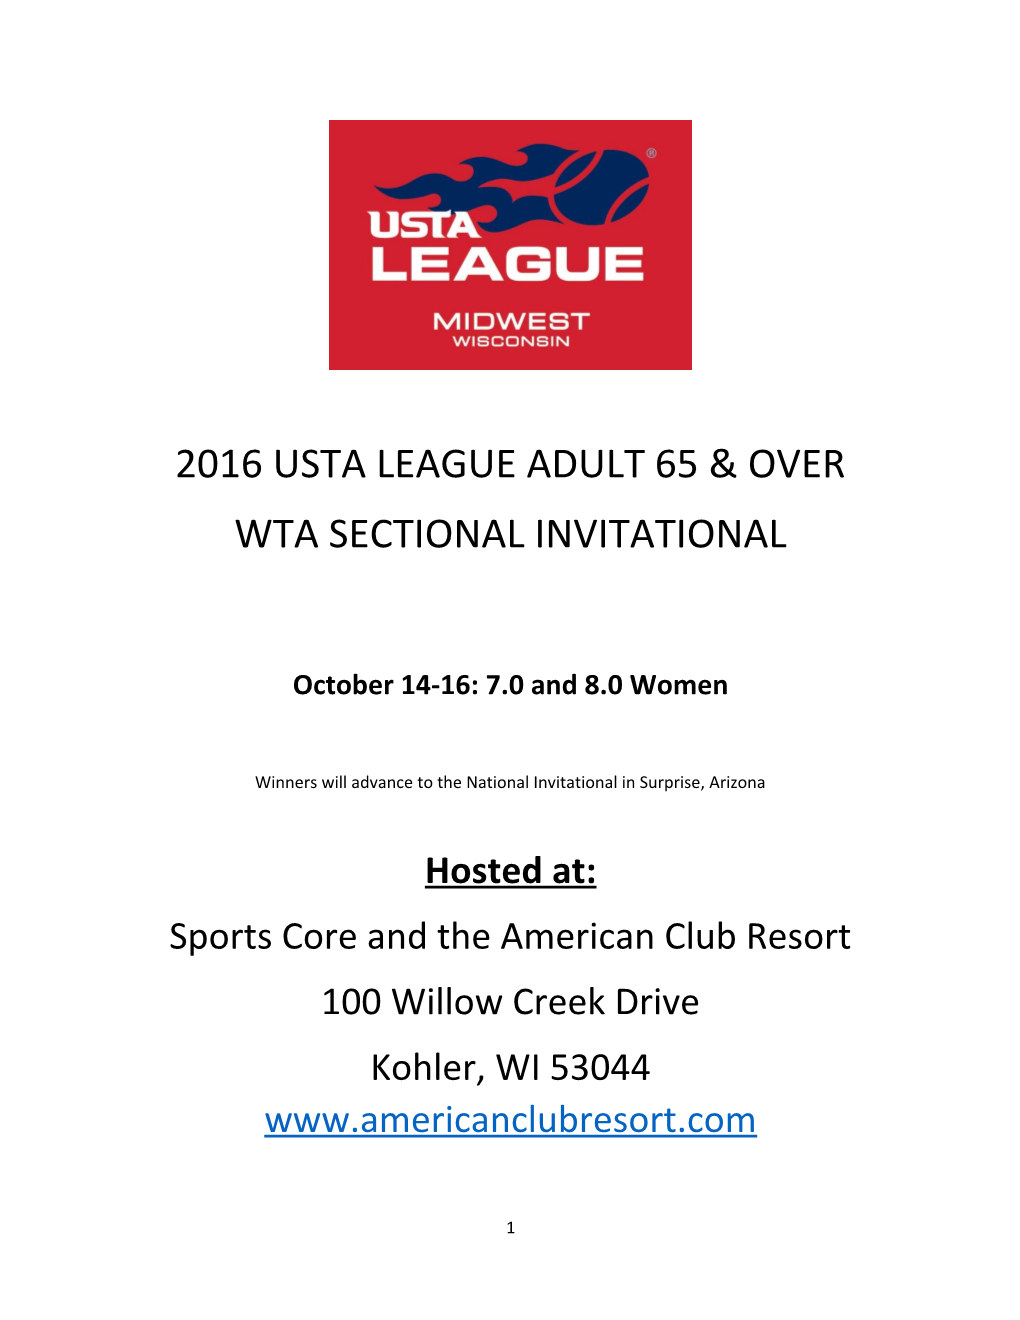 2016 Usta League Adult 65 & Over